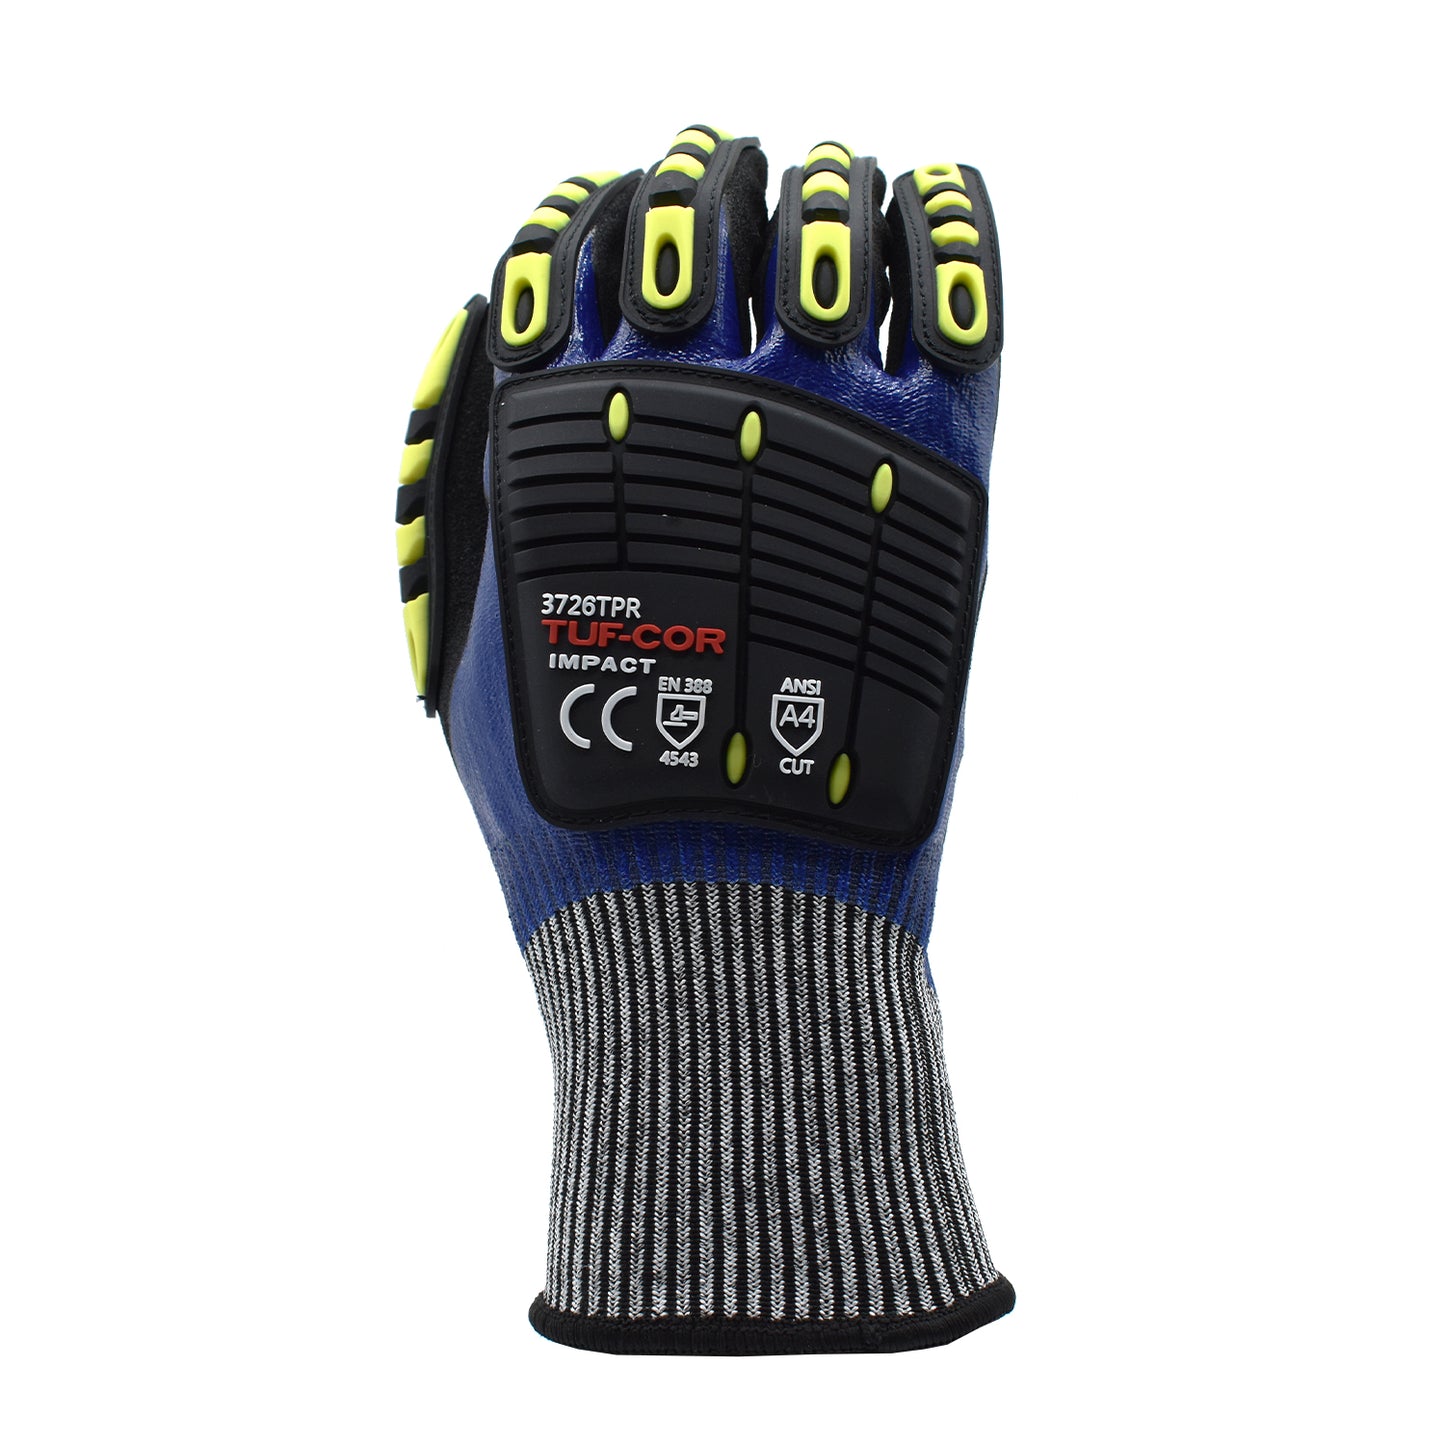 Tuf-Cor Cut-Resistant Impact Gloves, ANSI Cut level A4